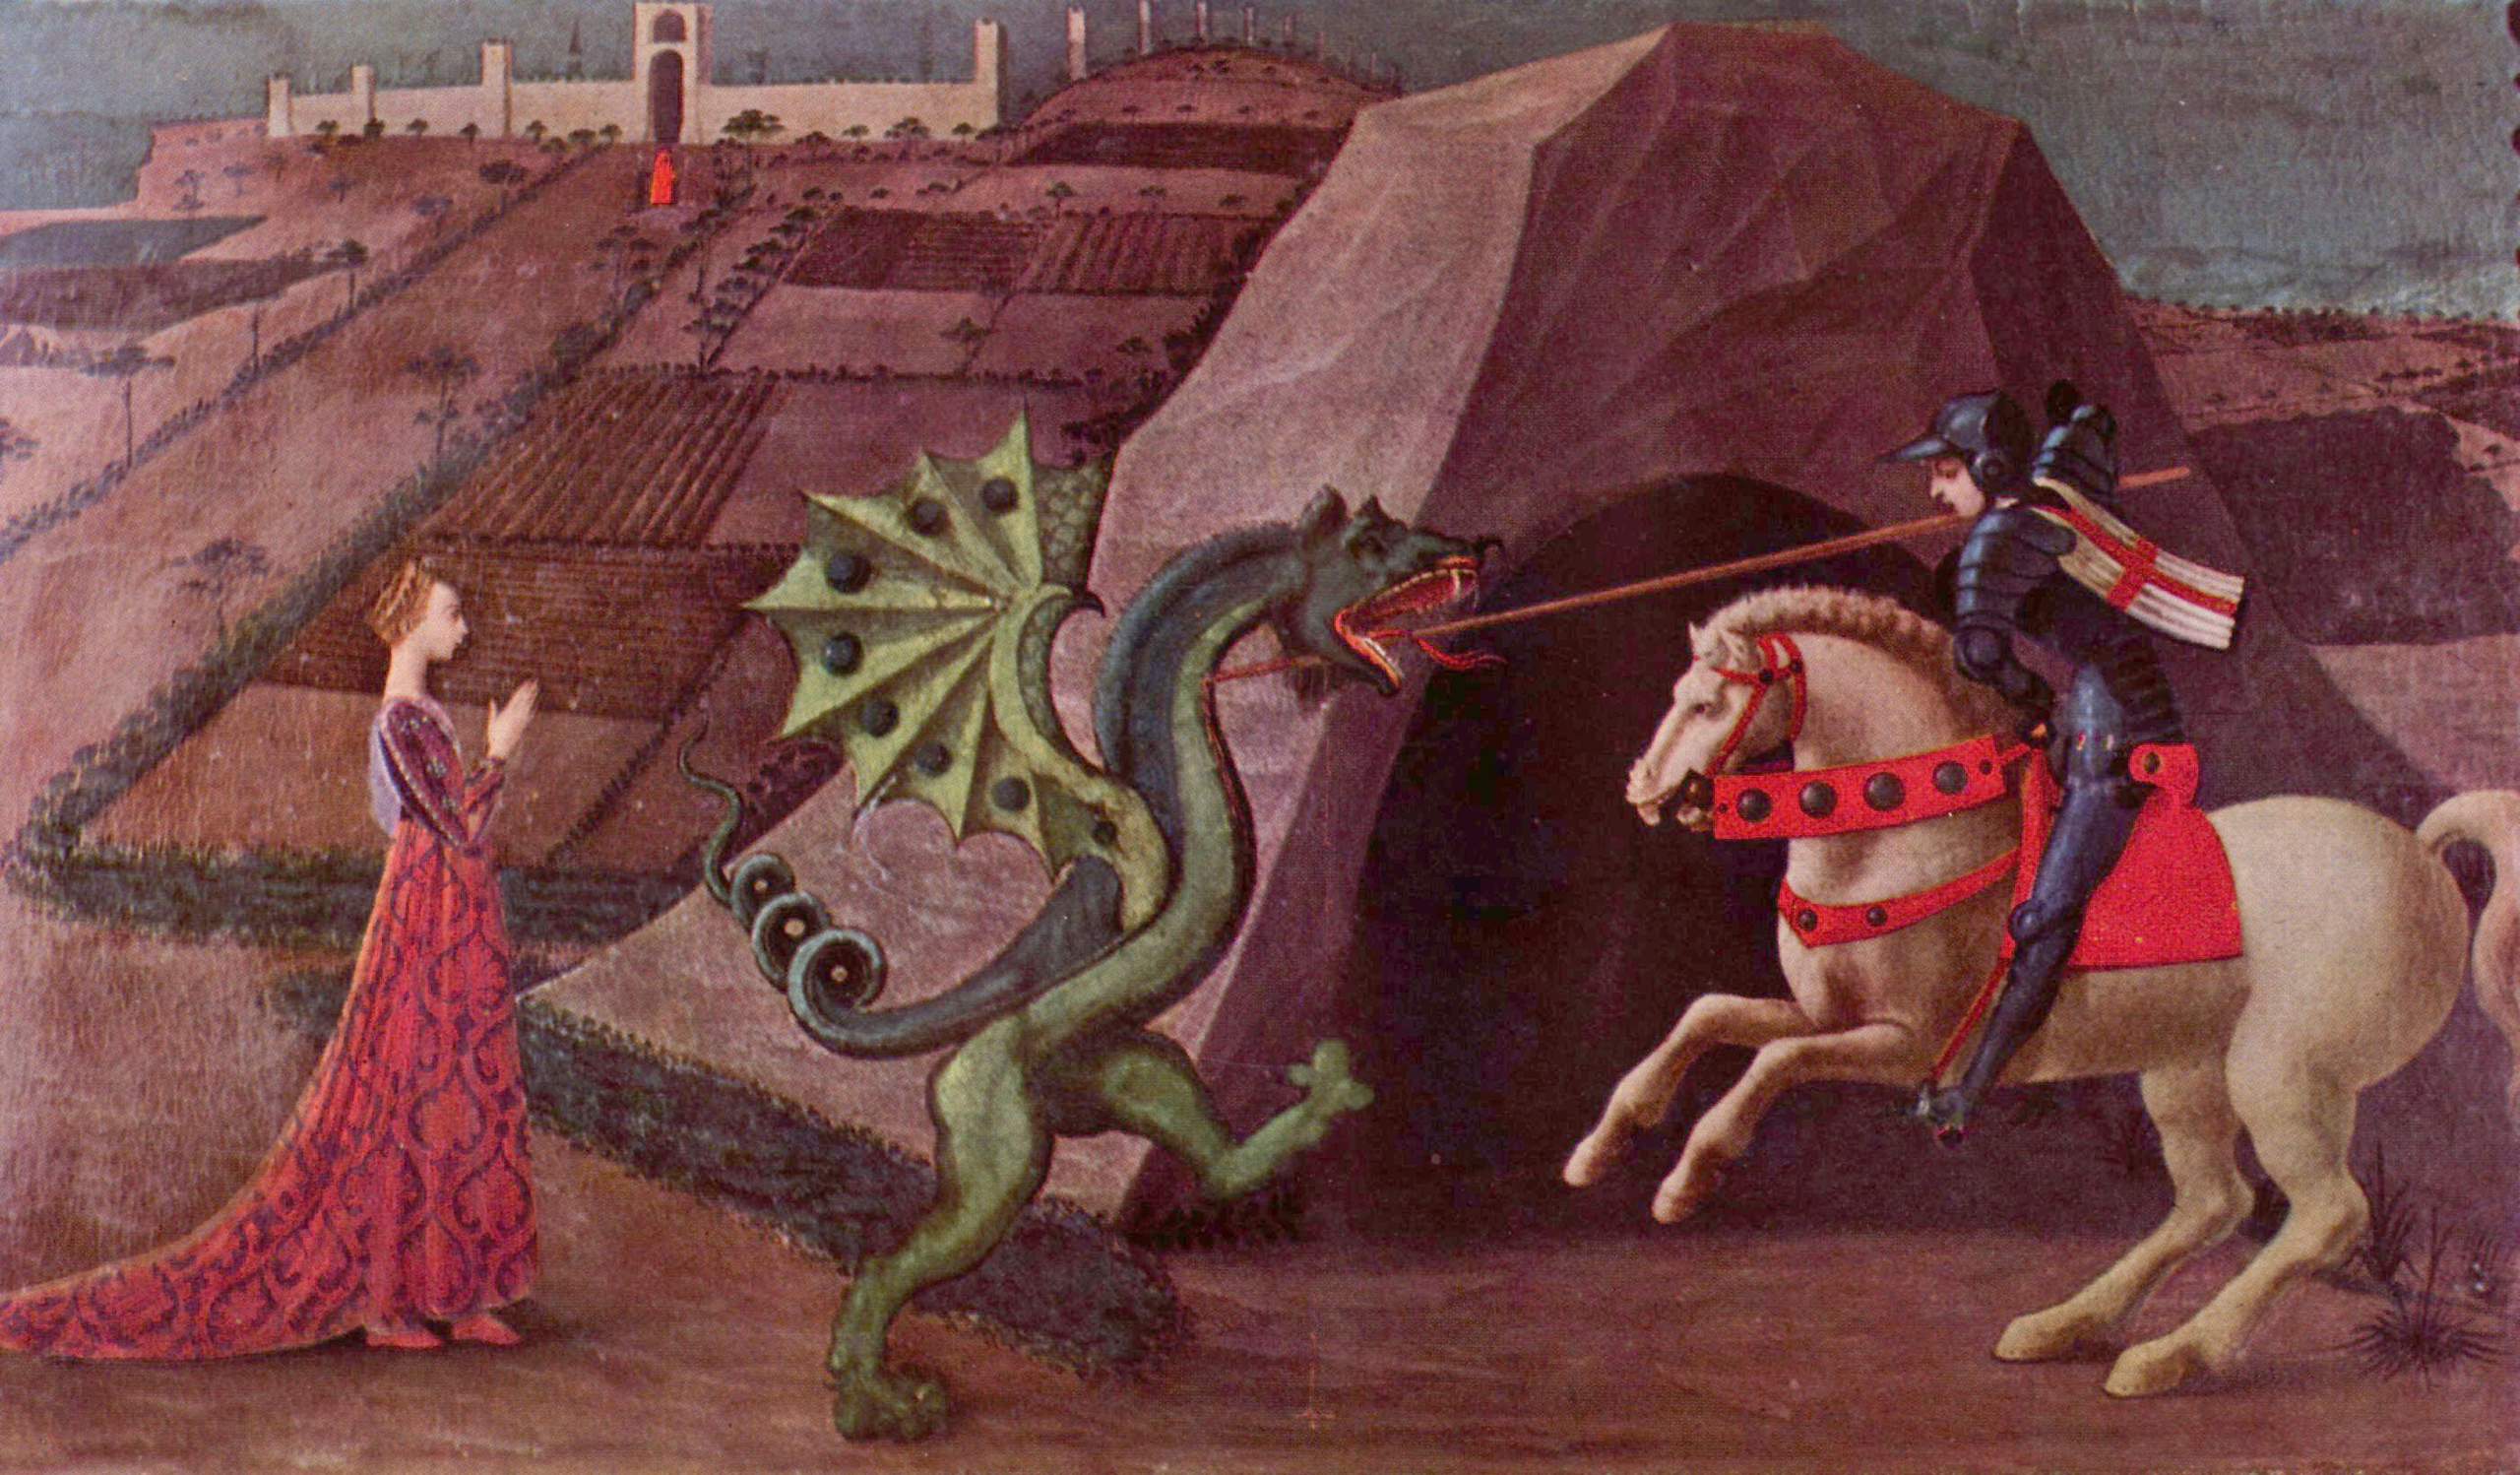 Dragon fighting man on horse